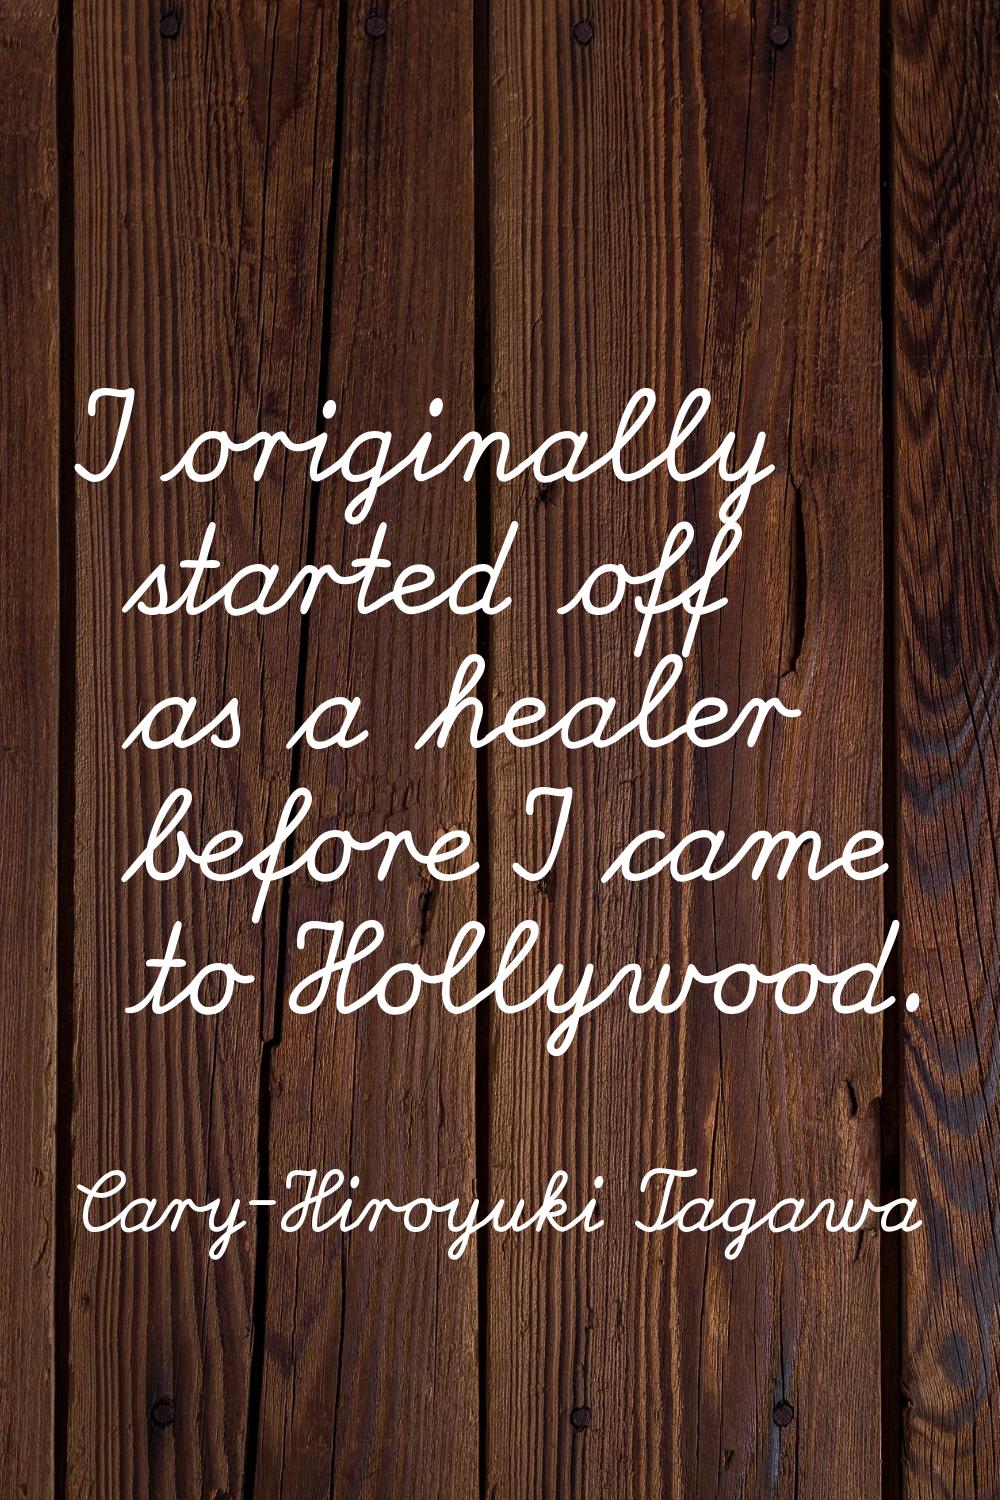 I originally started off as a healer before I came to Hollywood.